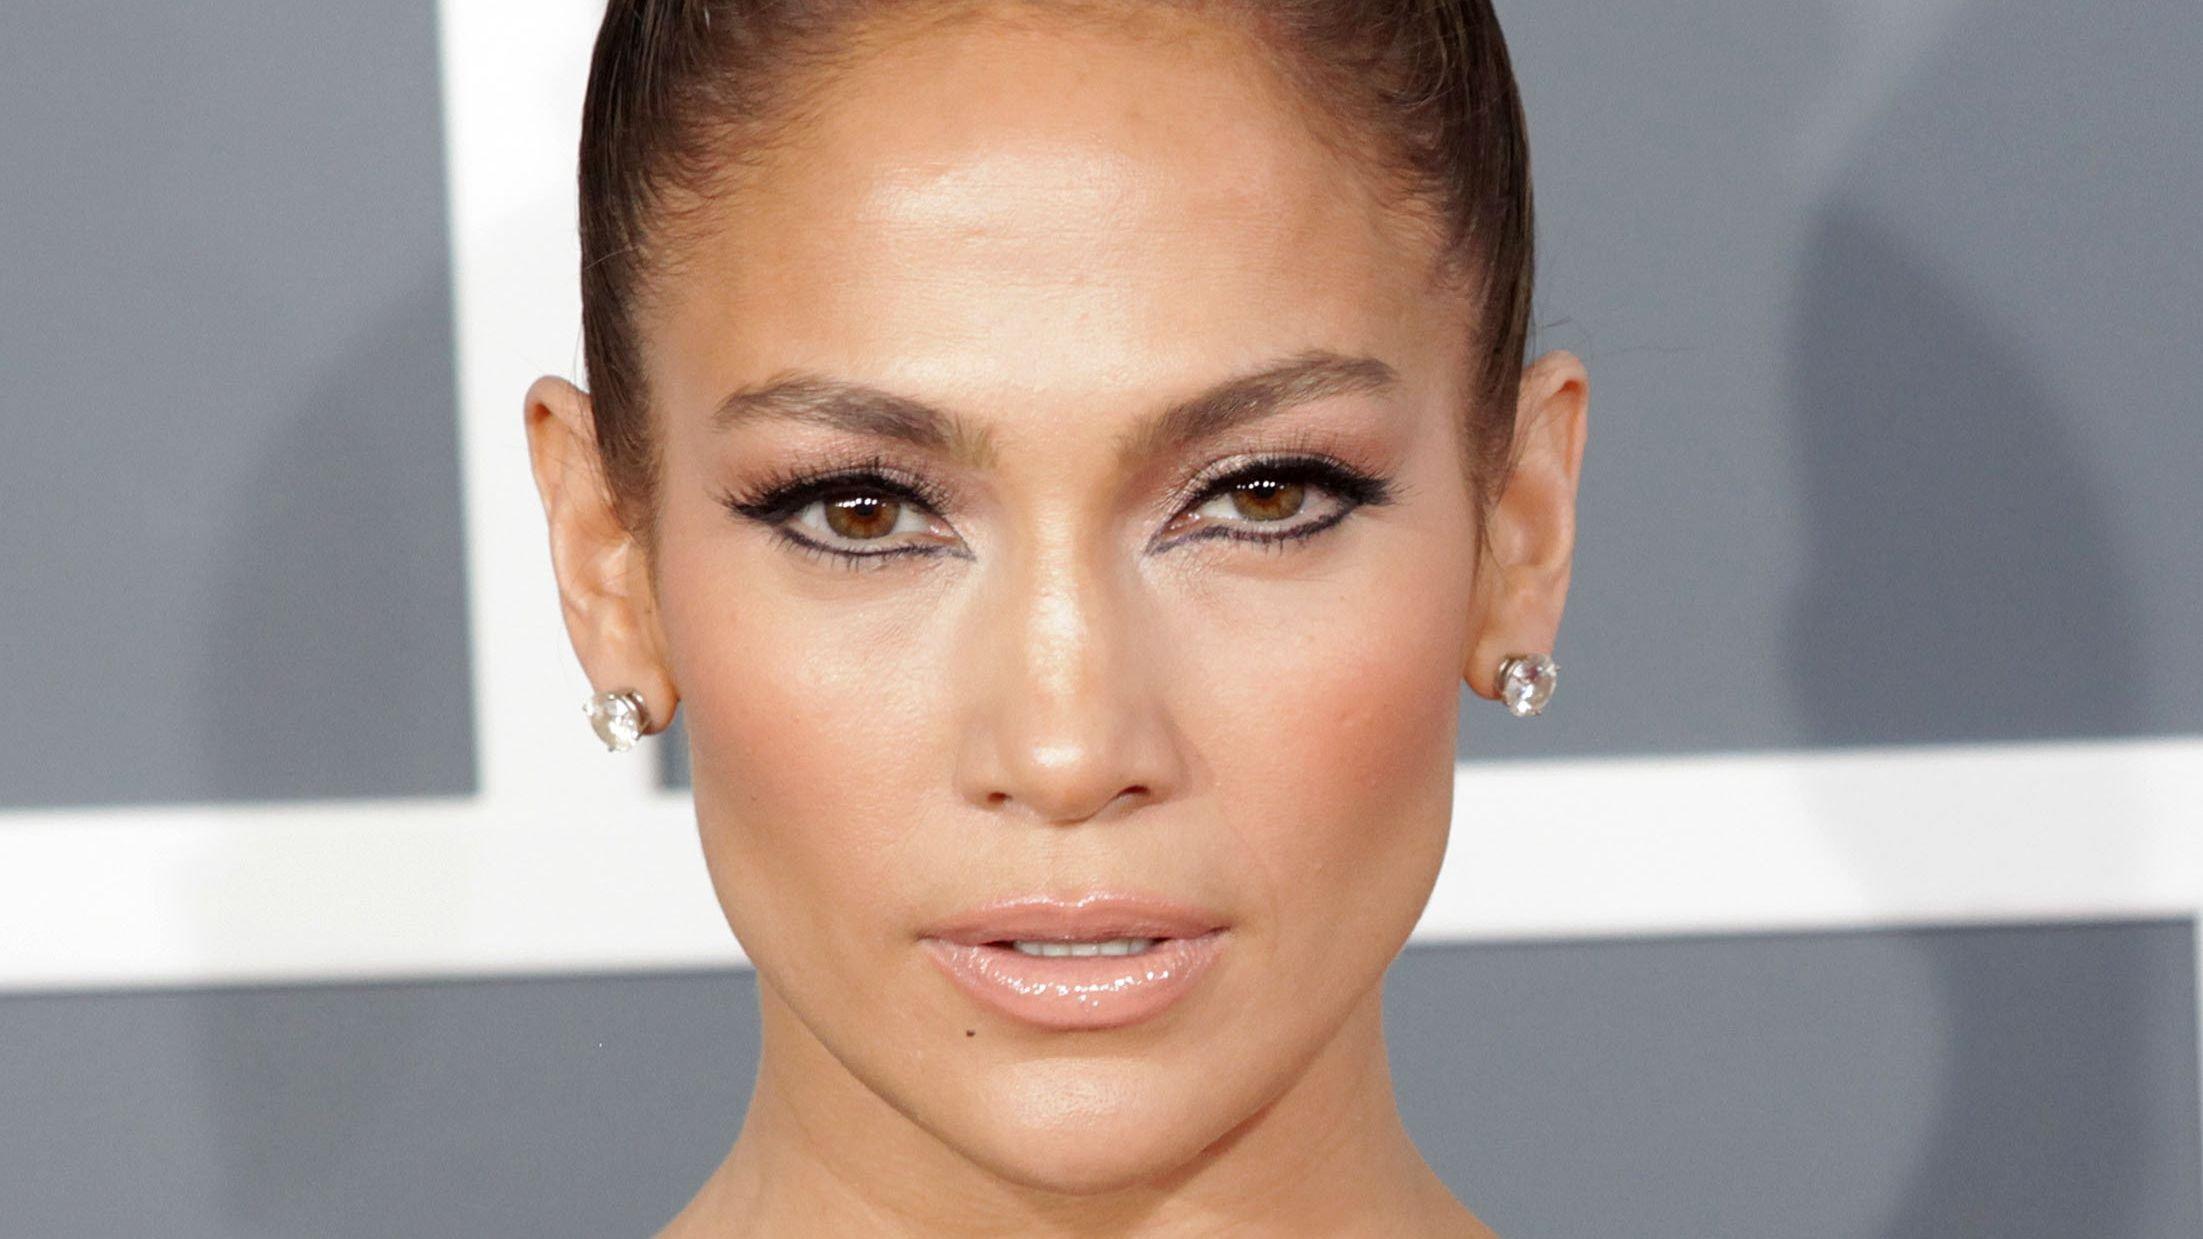 Jennifer Lopez rocks dramatic eyeliner, stud earrings, and slicked-back hair on the red carpet.